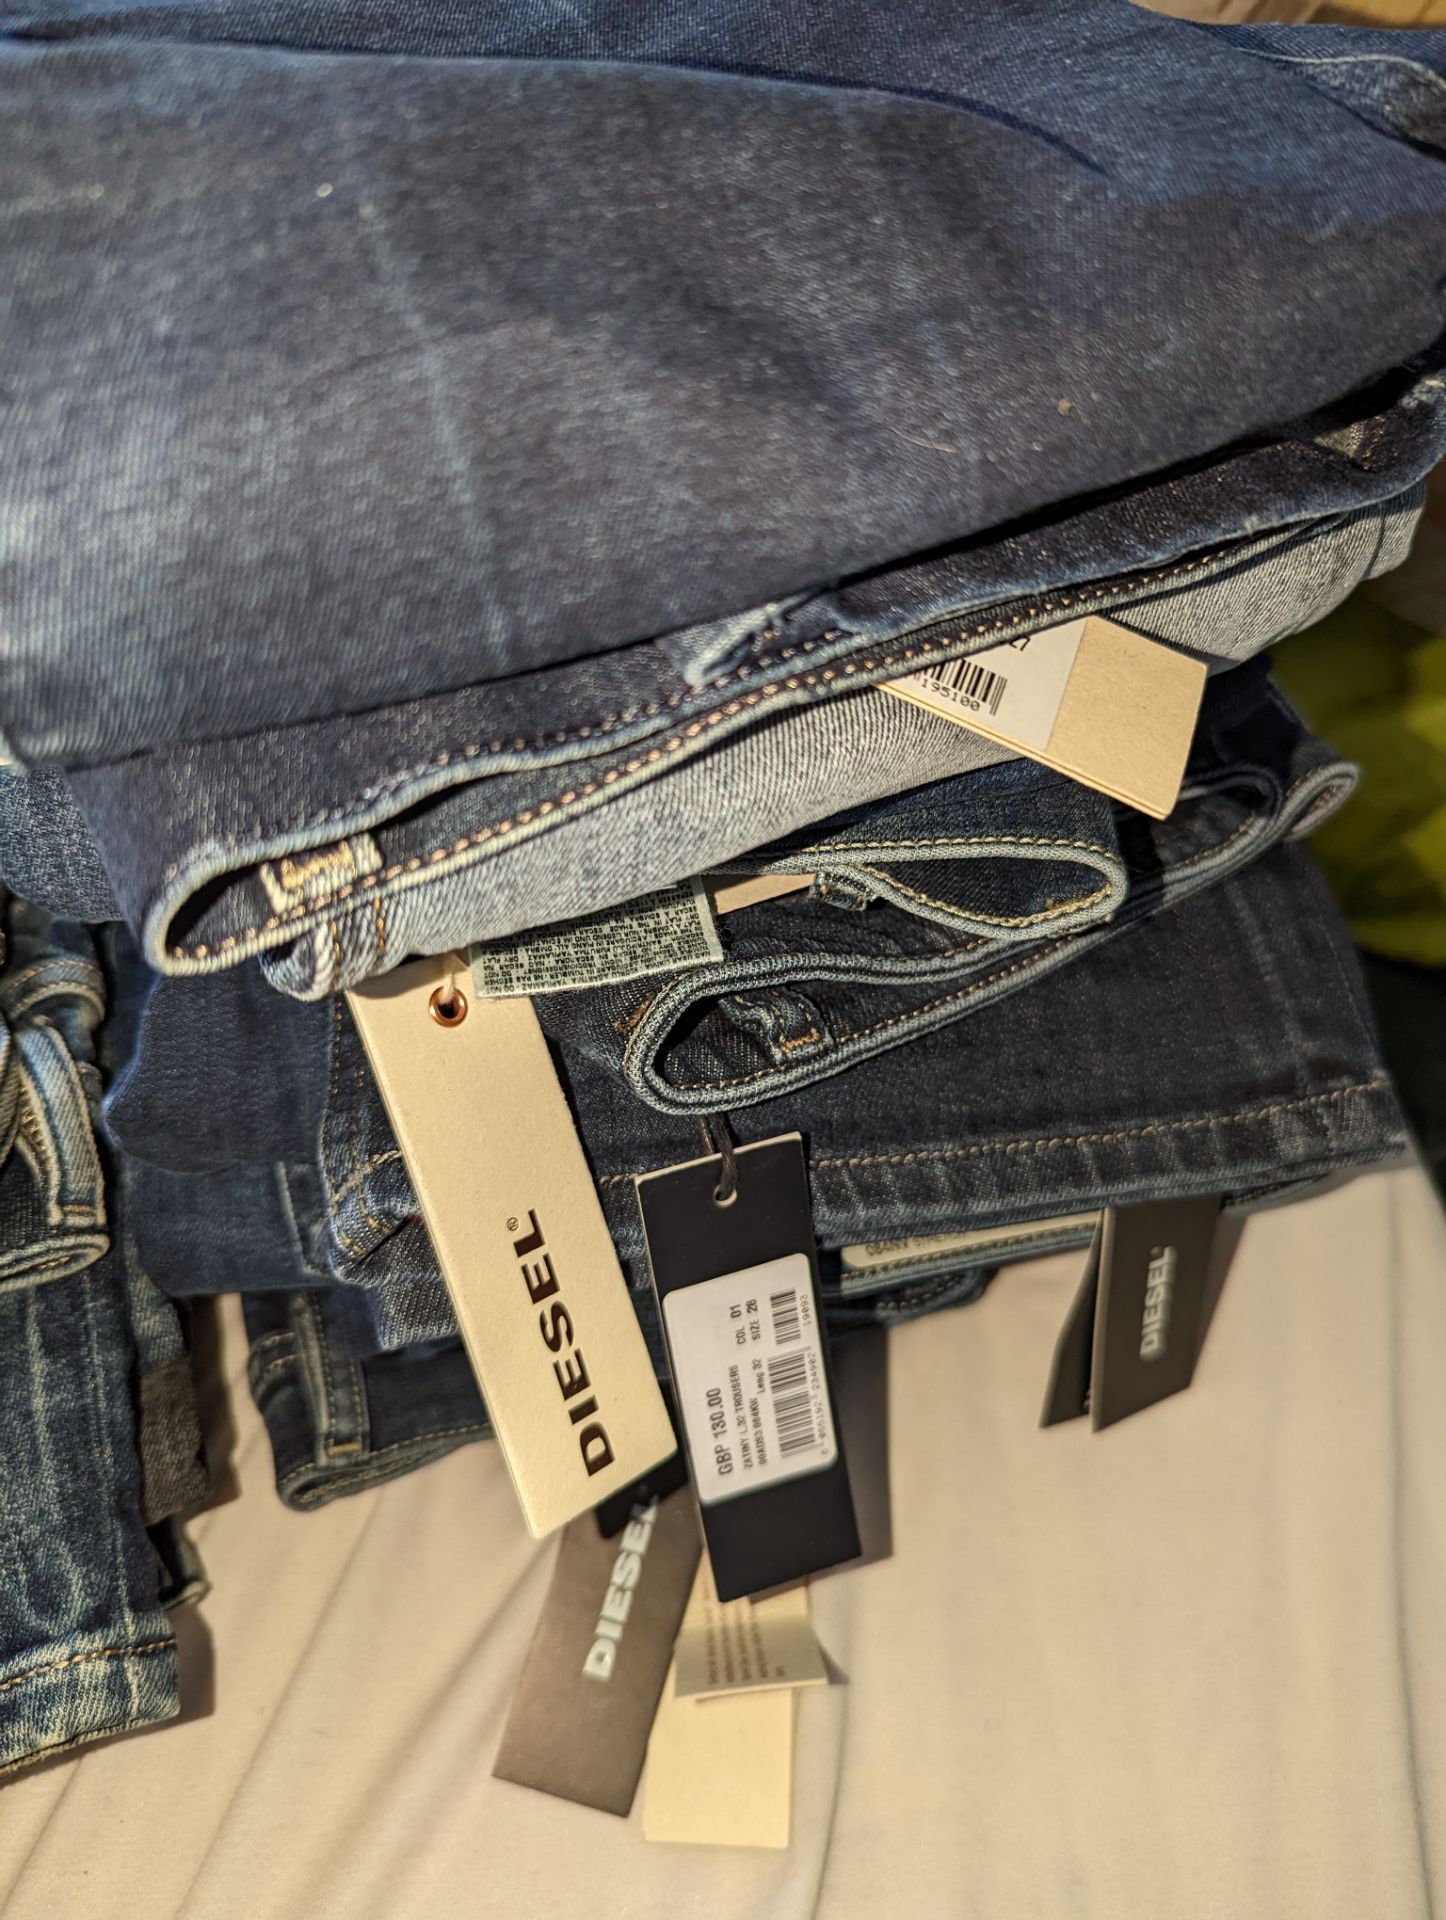 21 Brand New Men's/Women's Diesel Jeans - Image 3 of 6